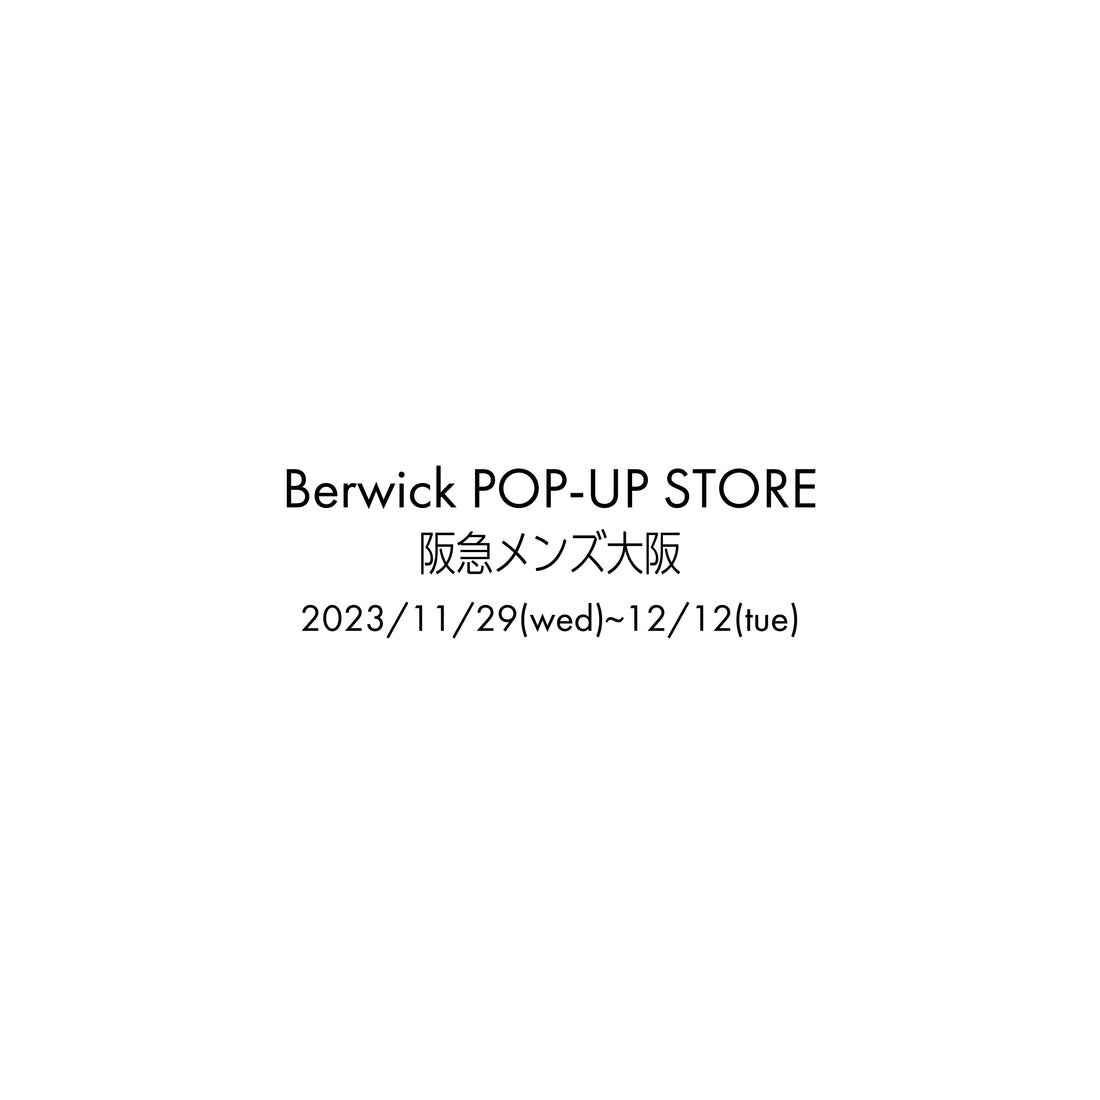 〈Berwick POP-UP STORE〉「阪急メンズ大阪」にてポップアップストア開催中のお知らせ